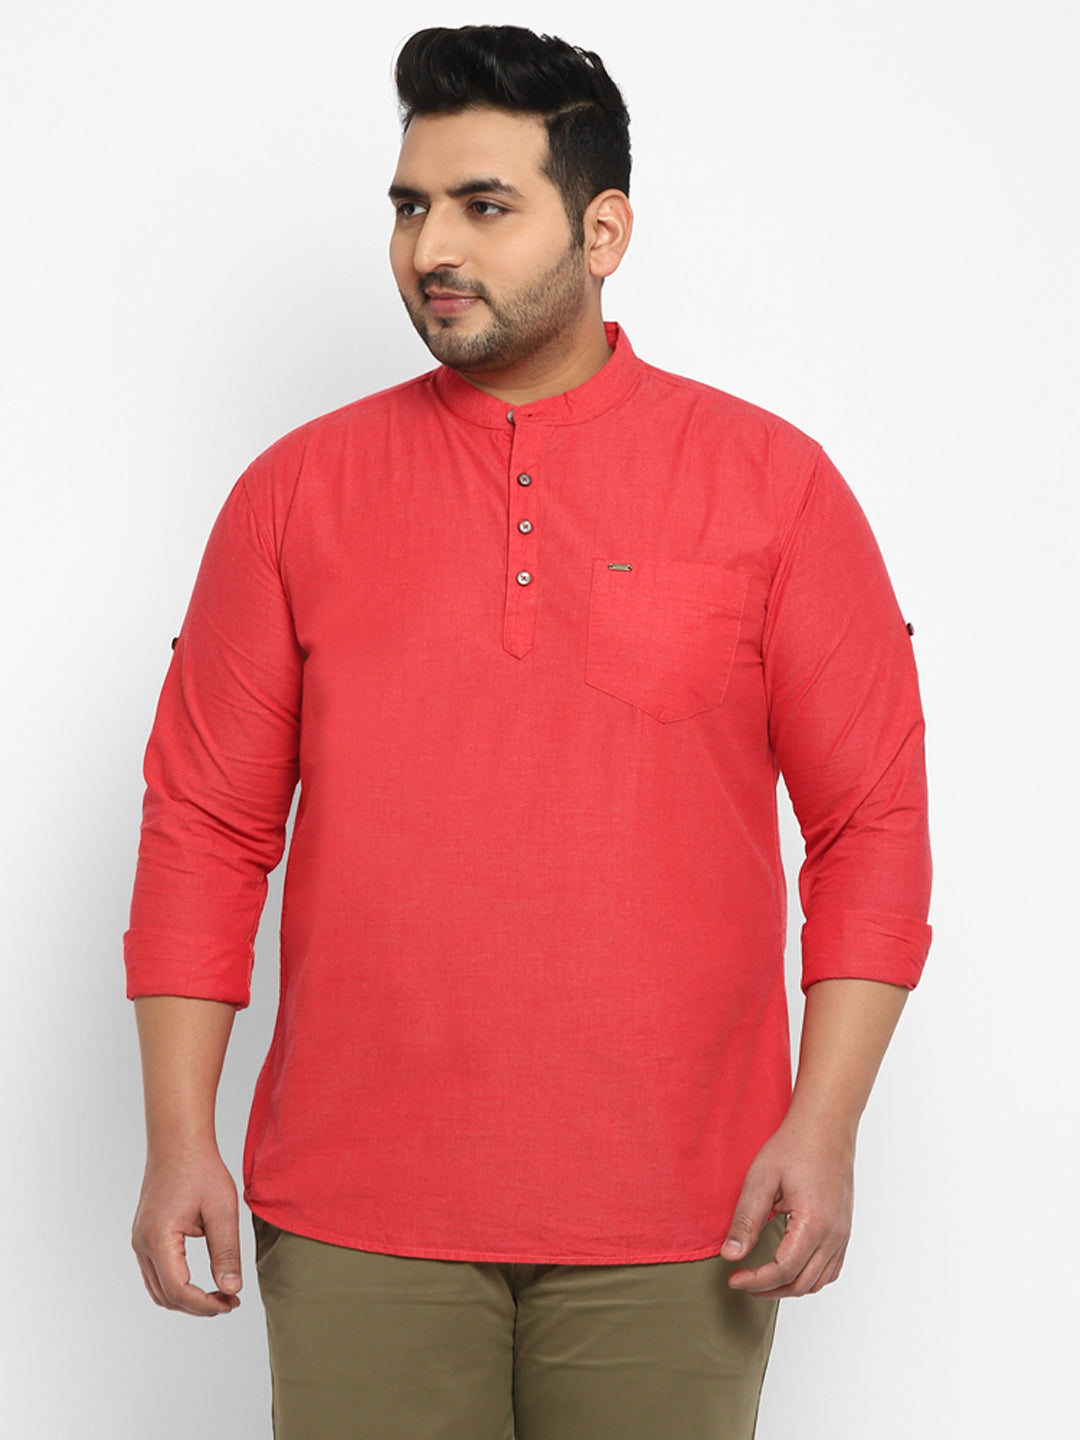 Men's Tomato Red Cotton Full Sleeve Shirt with Mandarin Collar